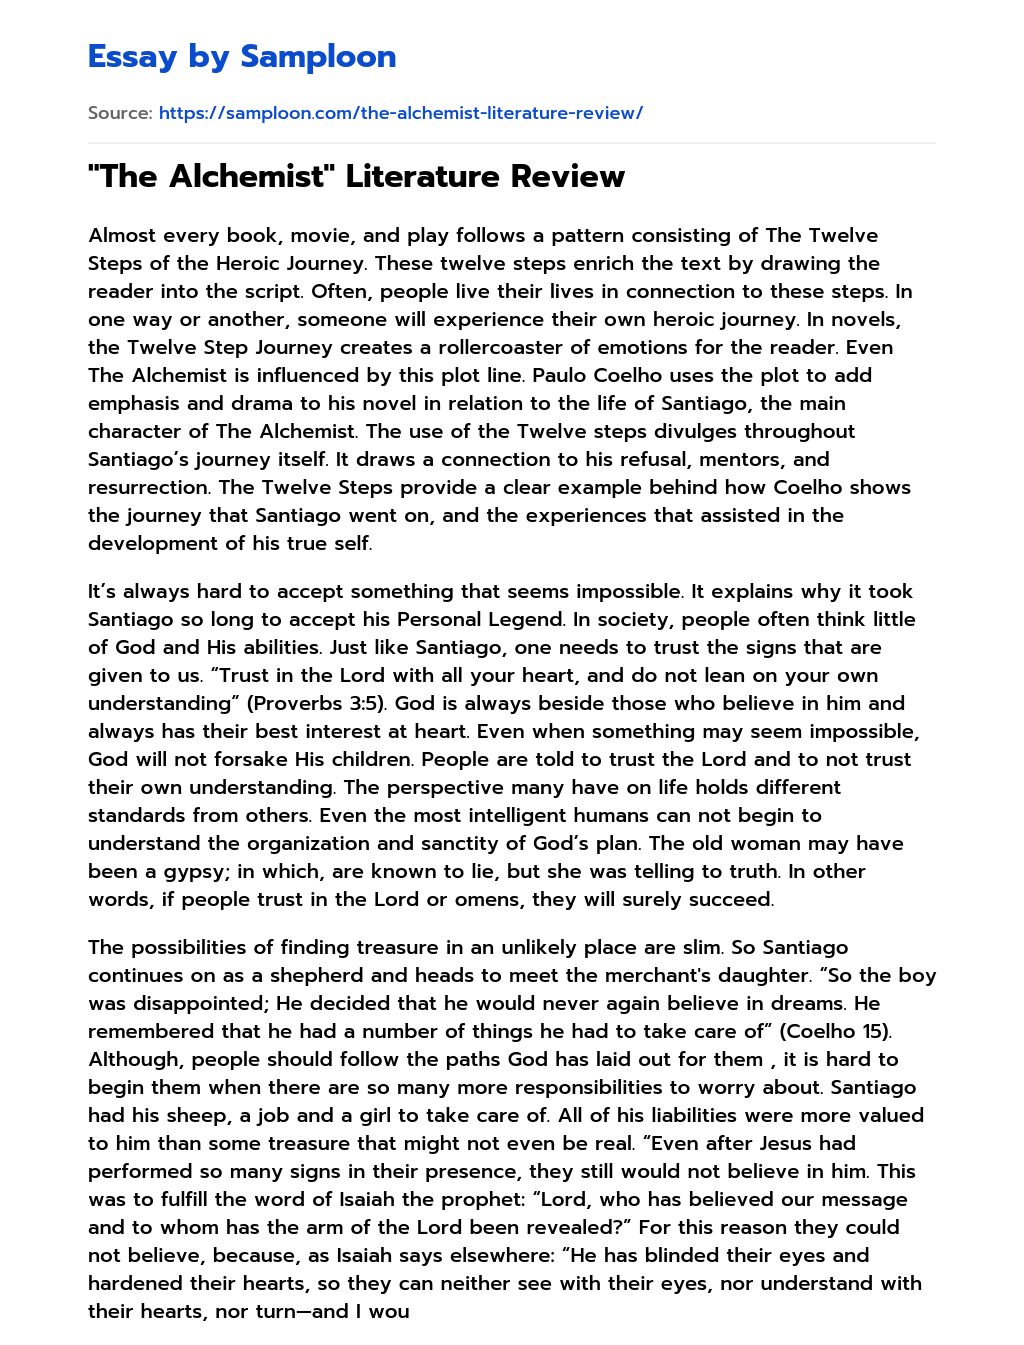 “The Alchemist” Literature Review essay